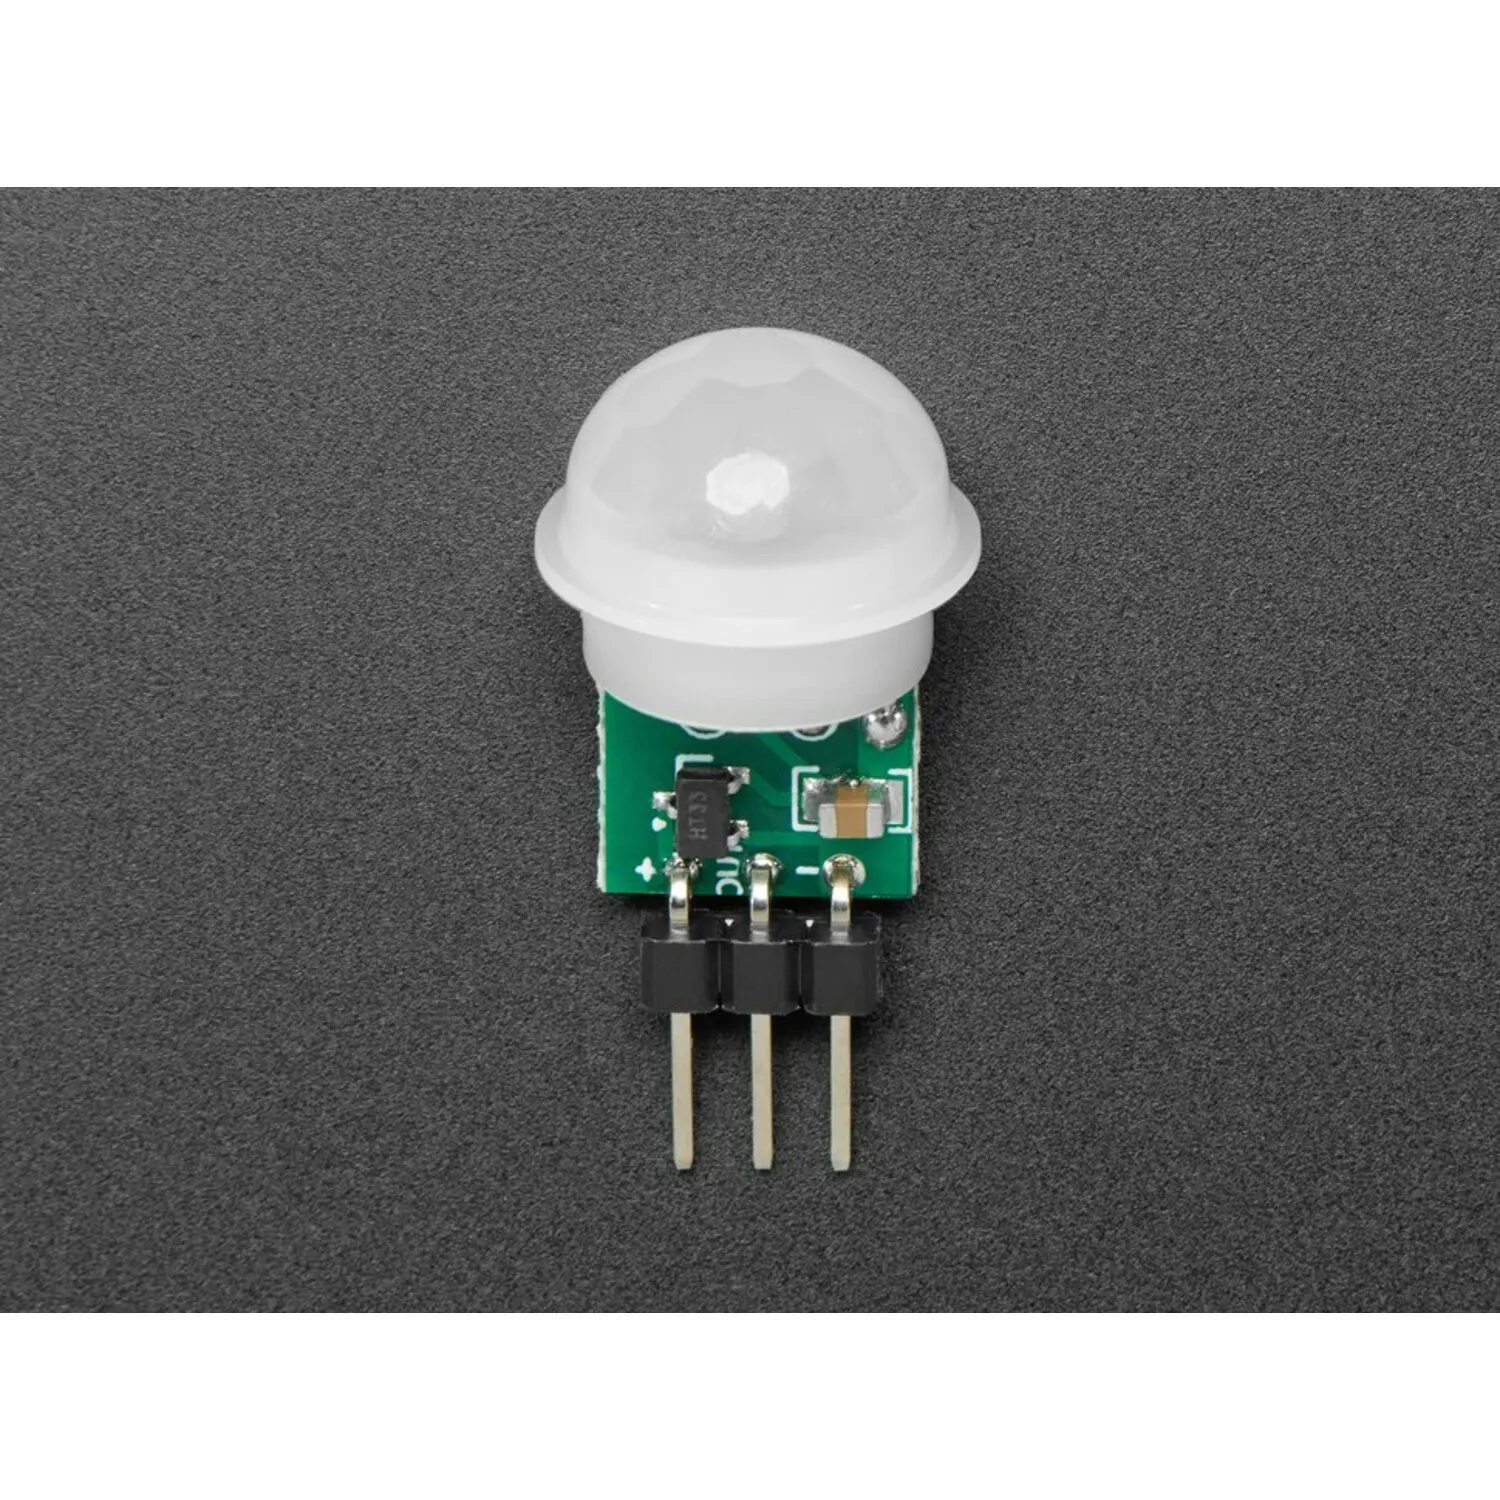 Photo of Breadboard-friendly Mini PIR Motion Sensor with 3 Pin Header